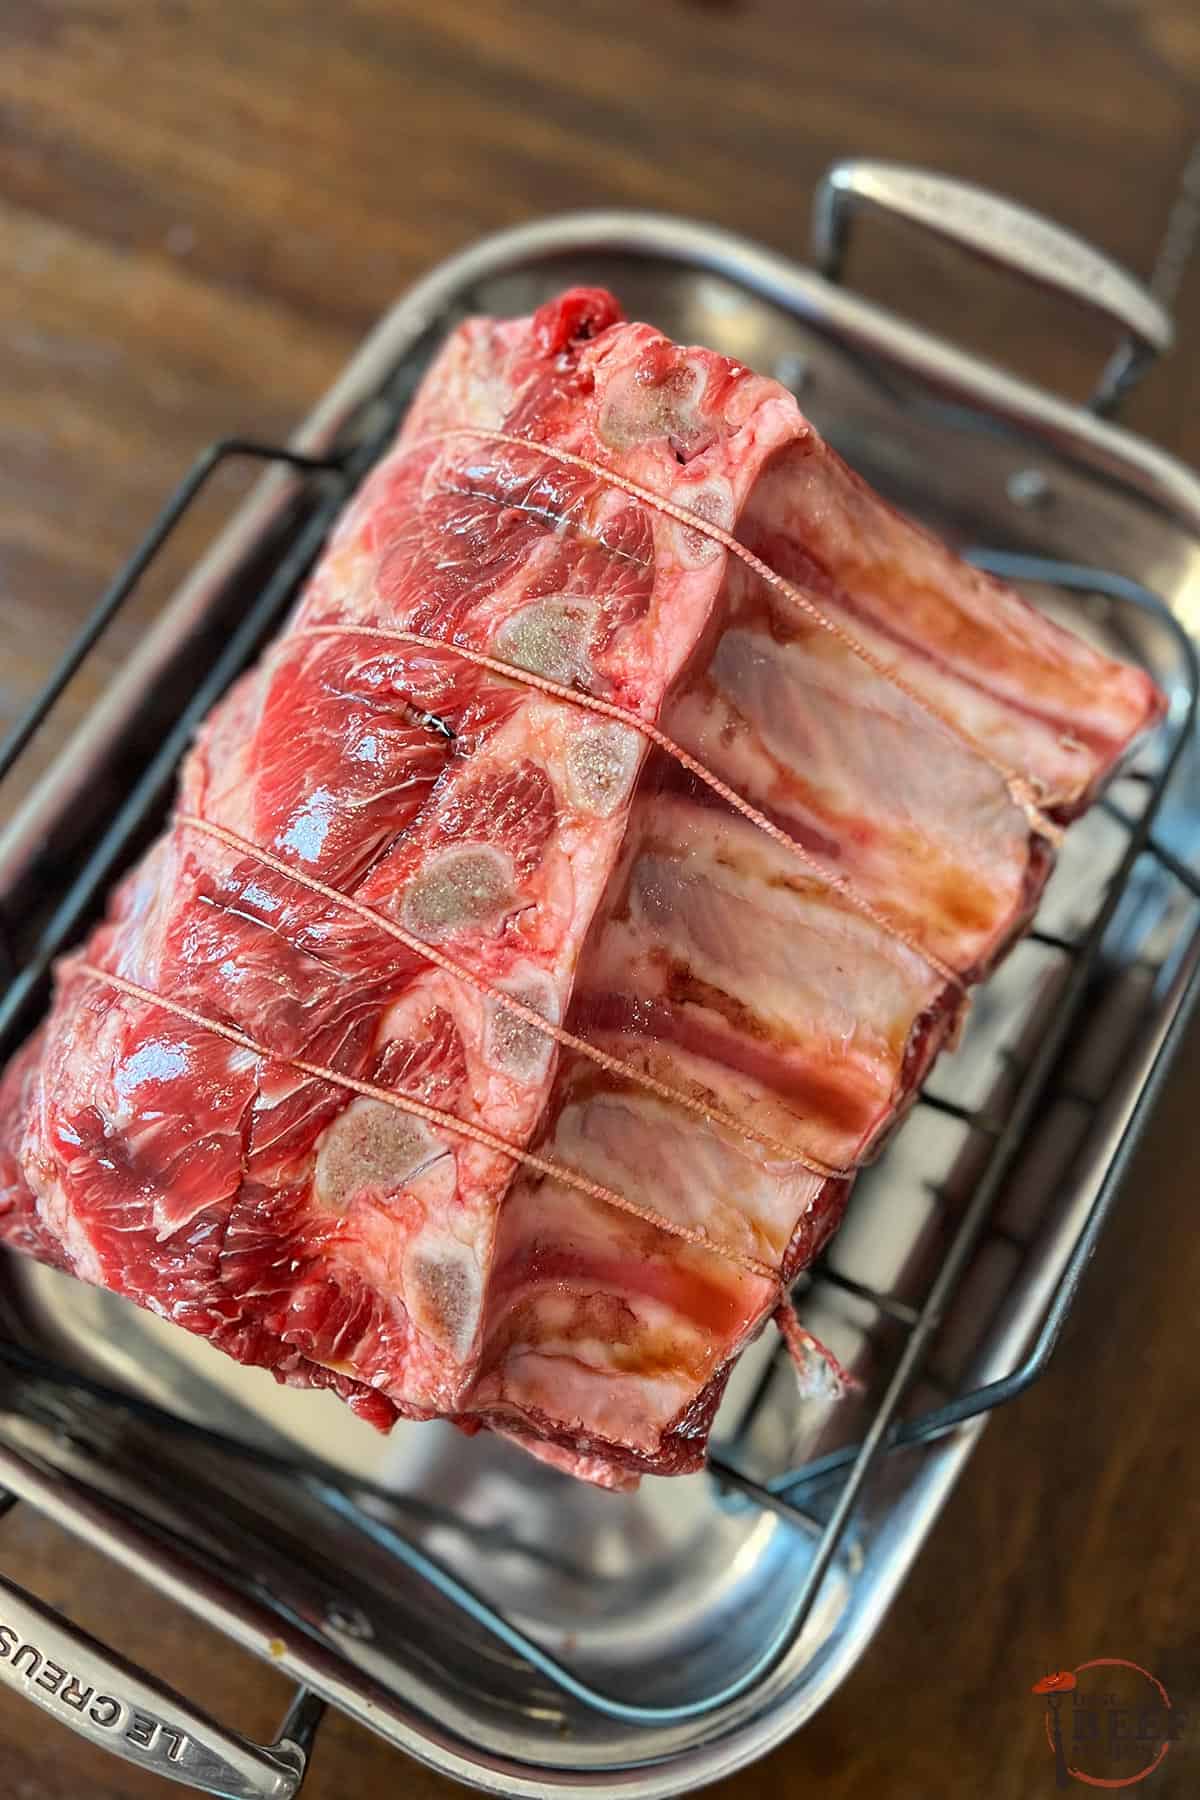 a tied prime rib on a roasting rack